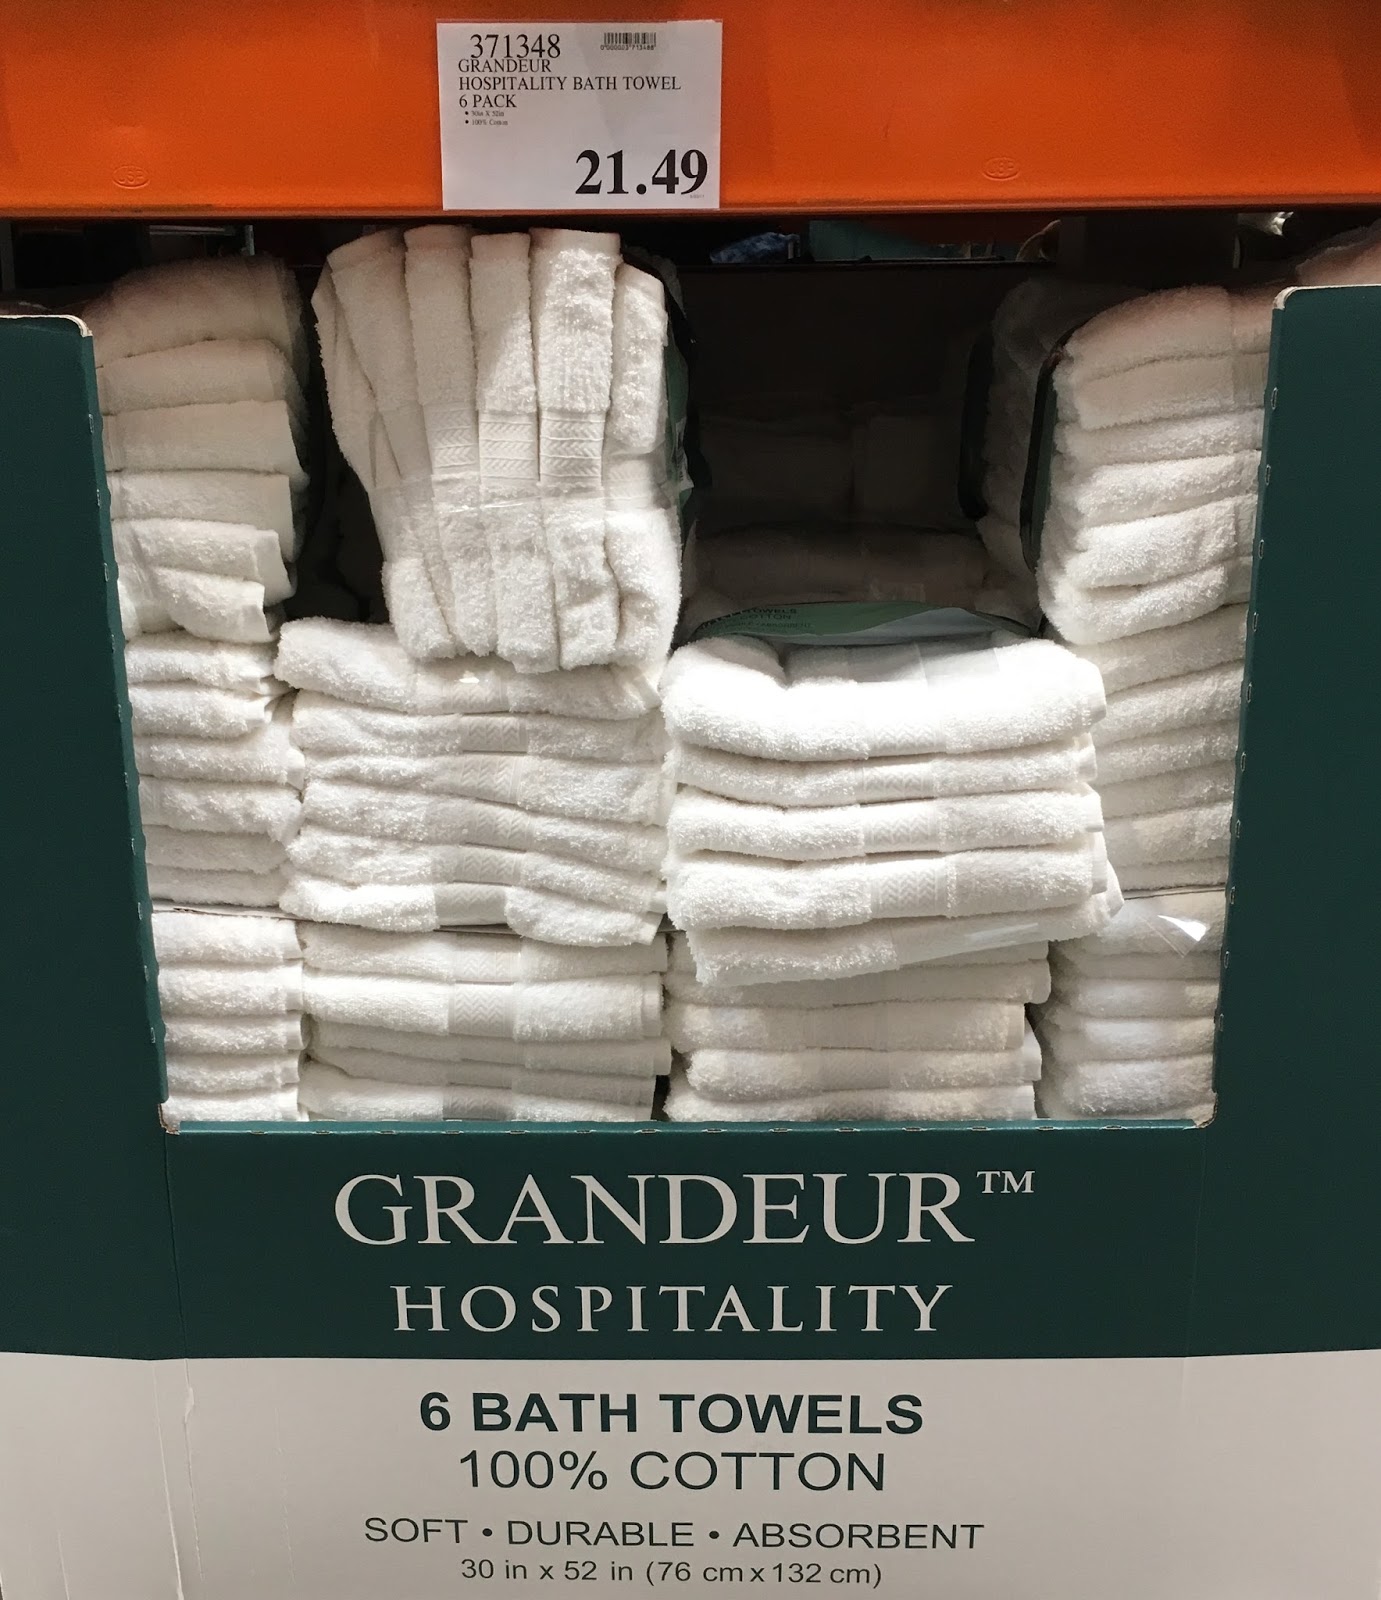 Grandeur Hospitality bath towels, Costco deals this week